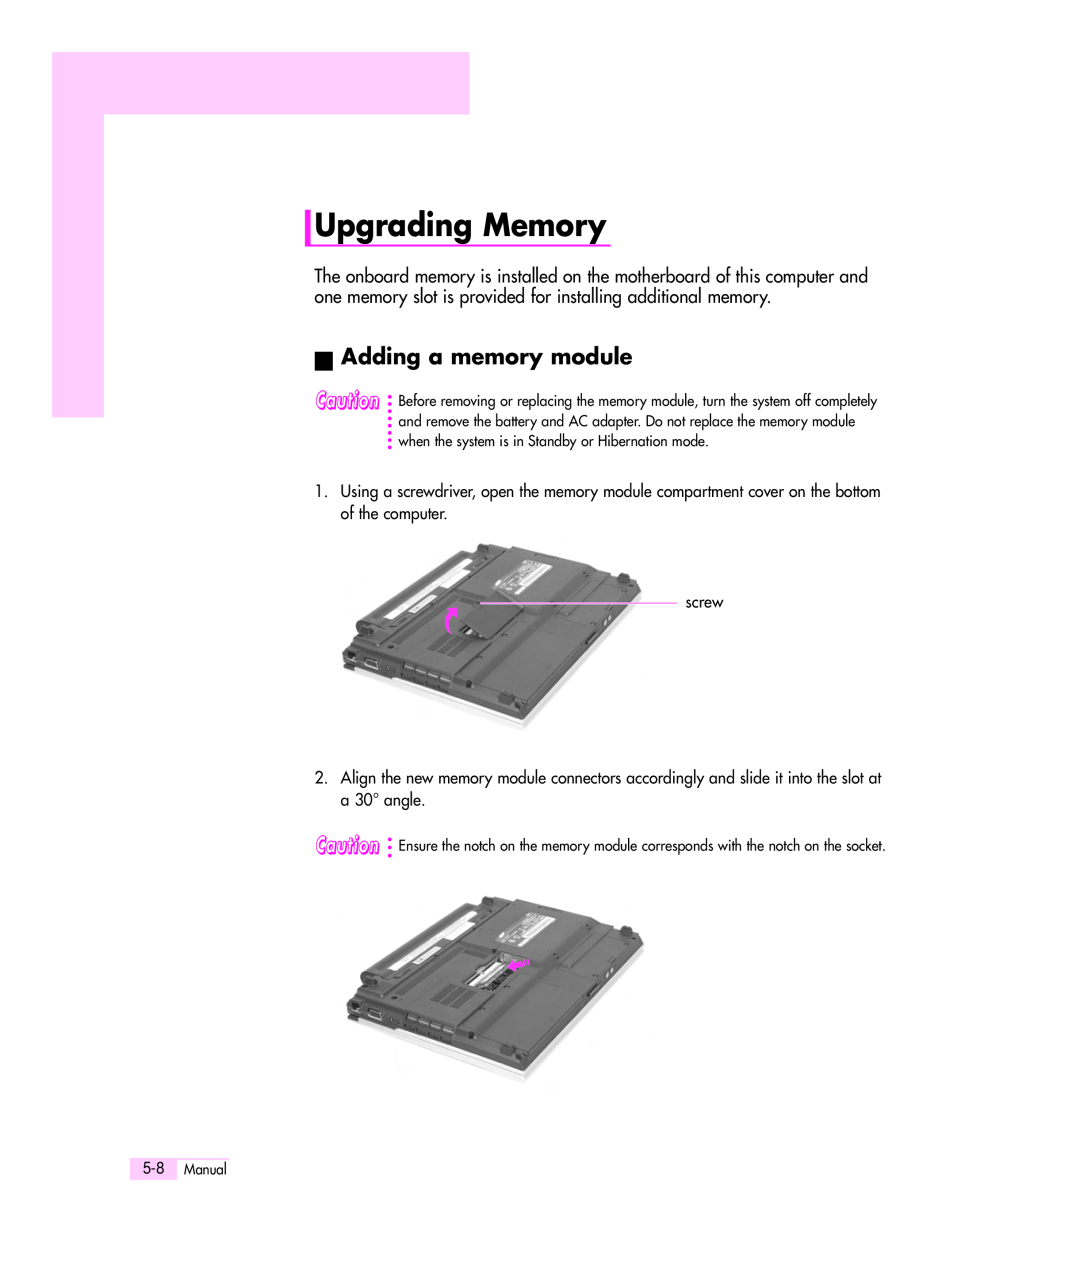 Samsung Q35 manual Upgrading Memory, Adding a memory module 